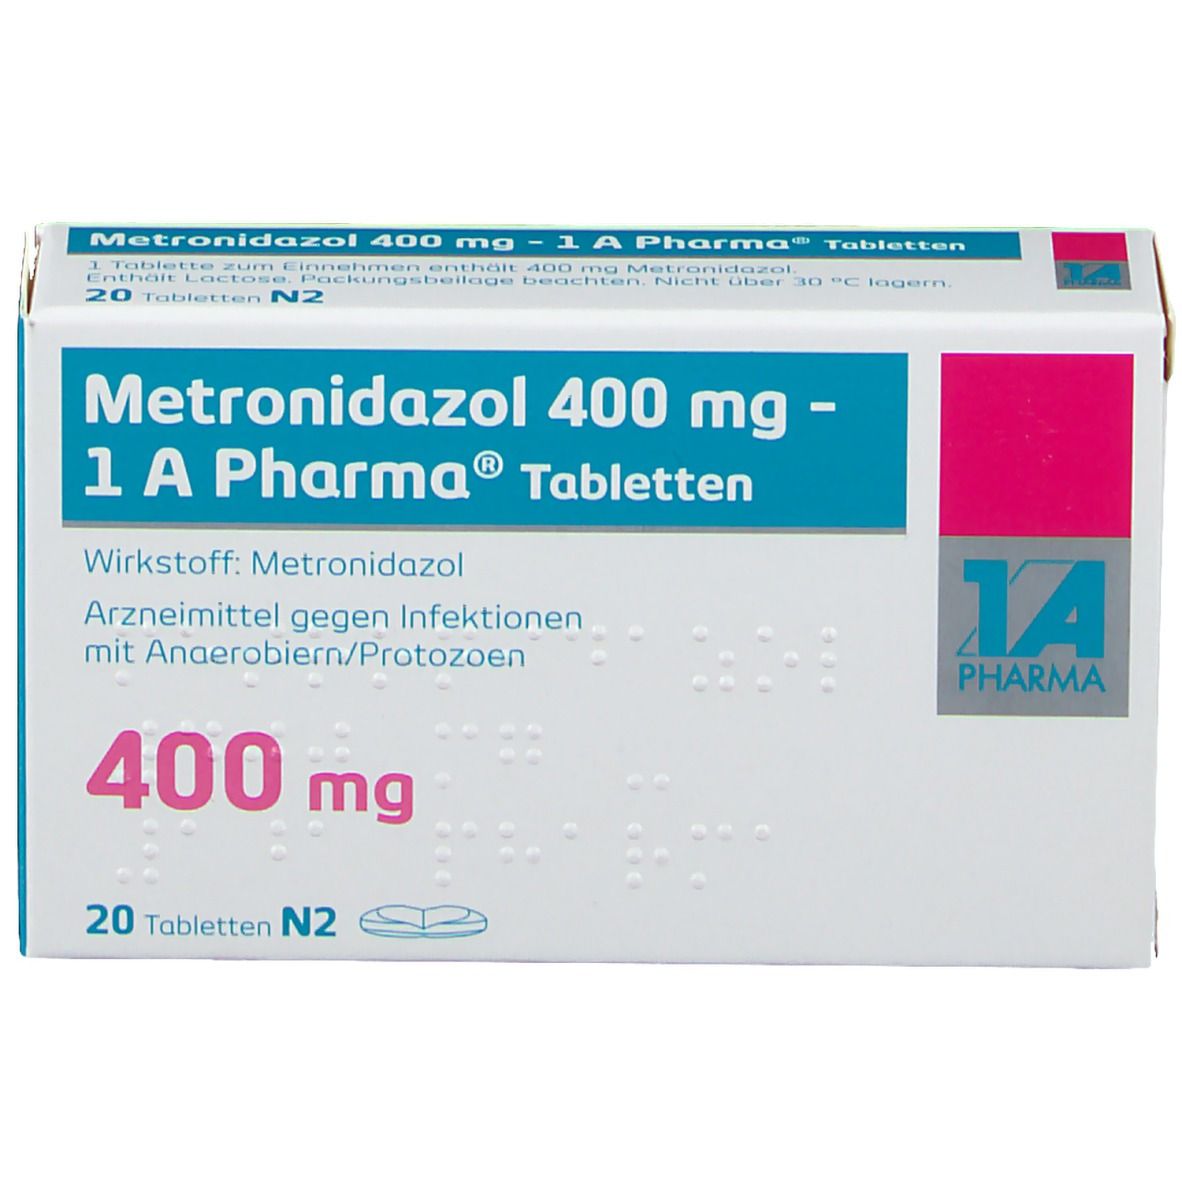 METRONIDAZOL 400 mg 1A Pharma Tabletten